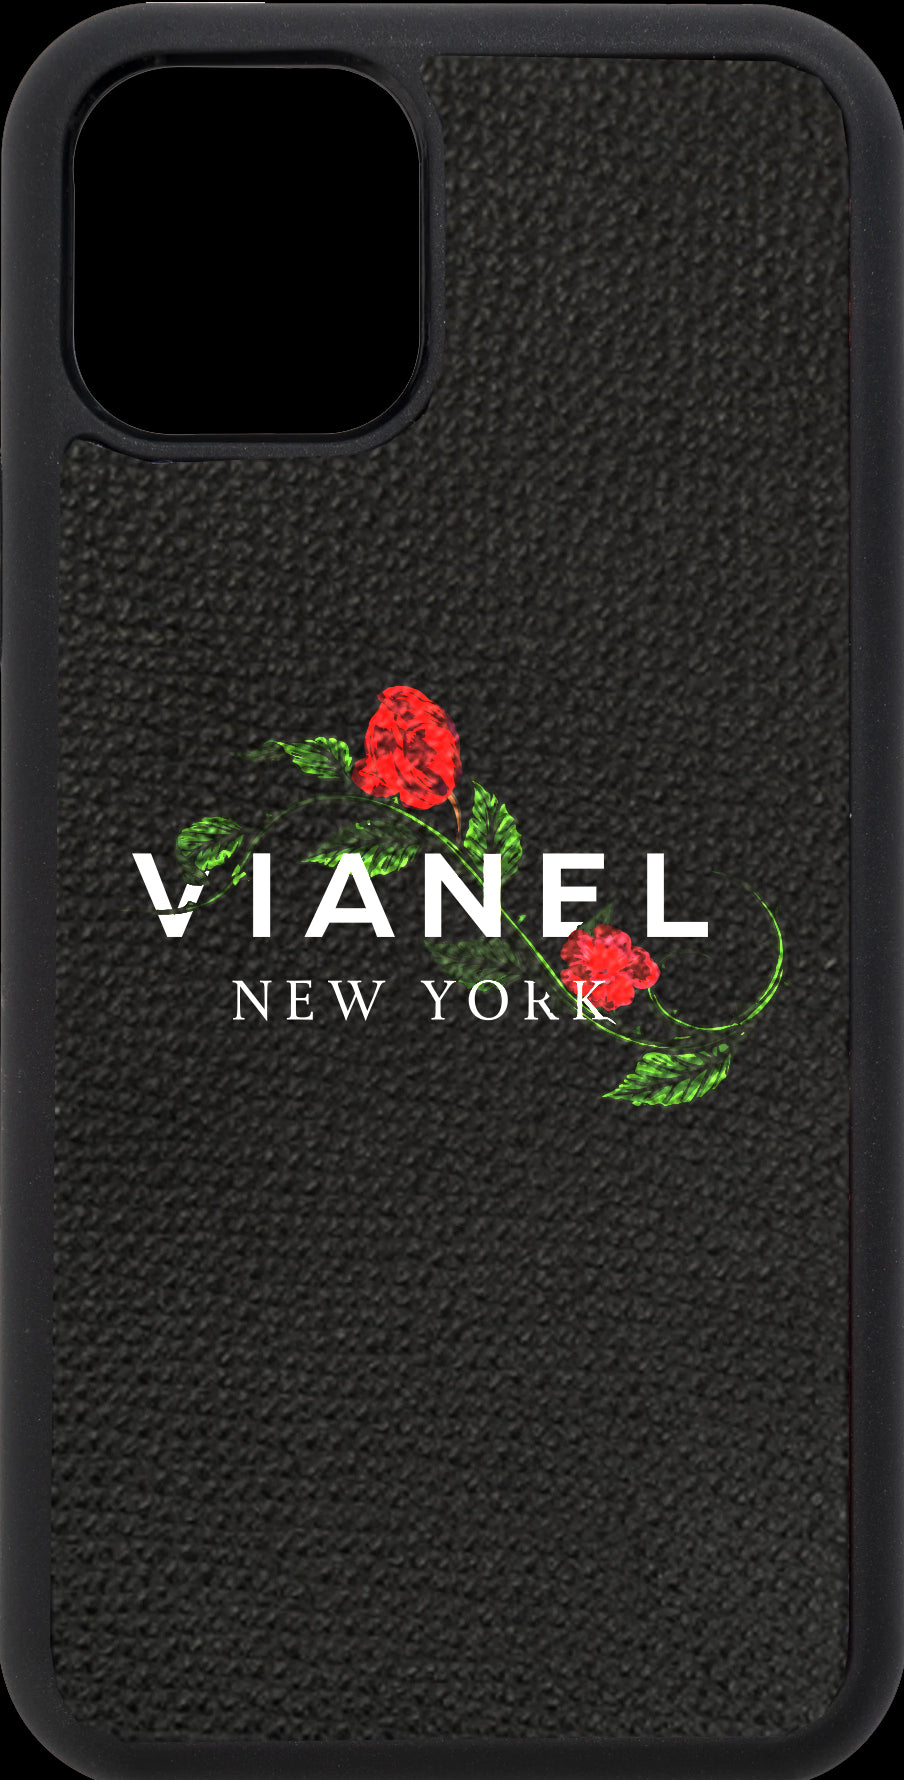 vianel coque iphone 6 personalized